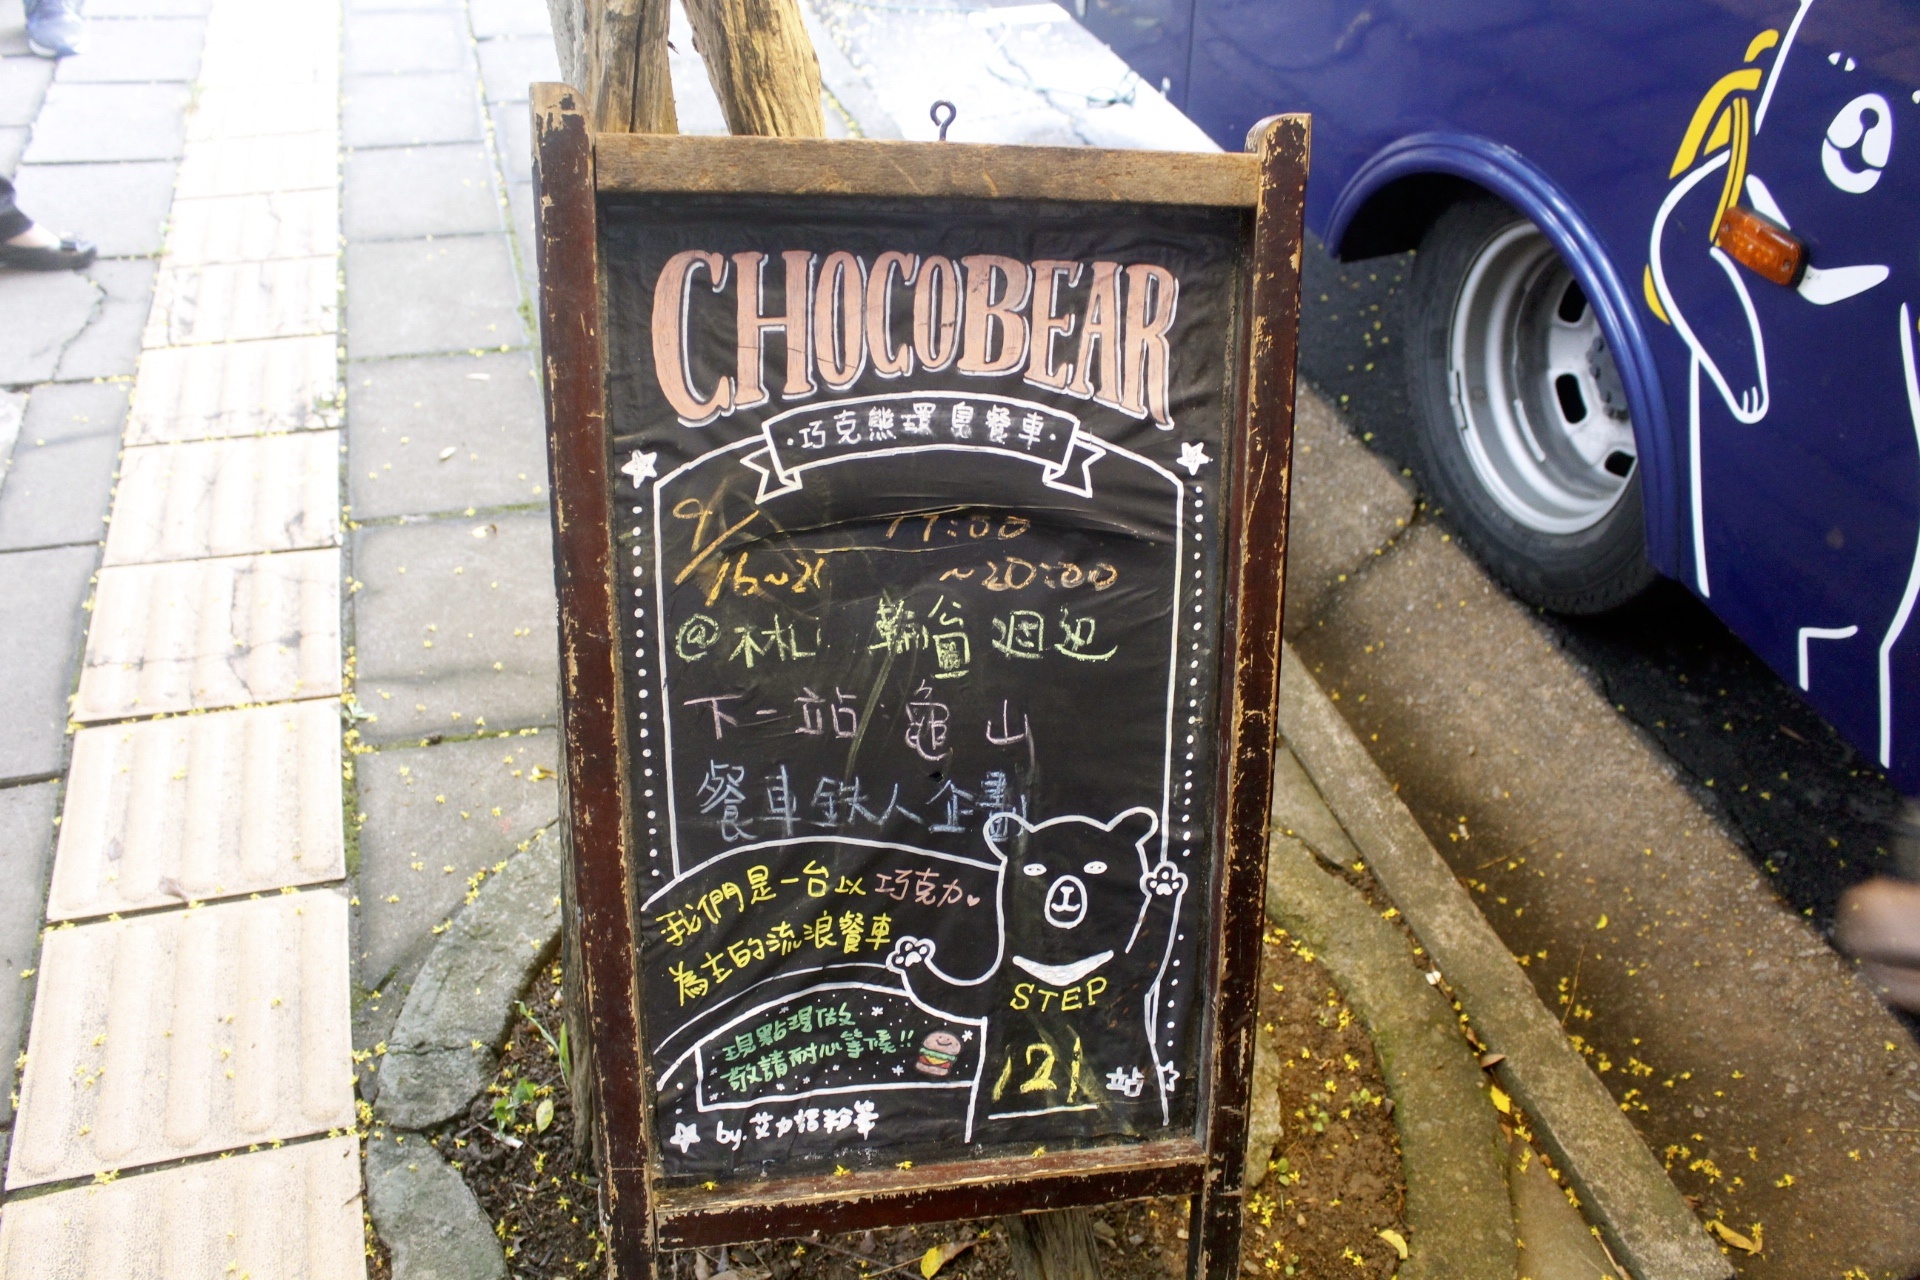 CHOCOBear 巧克熊環島餐車,巧克力漢堡,環島餐車